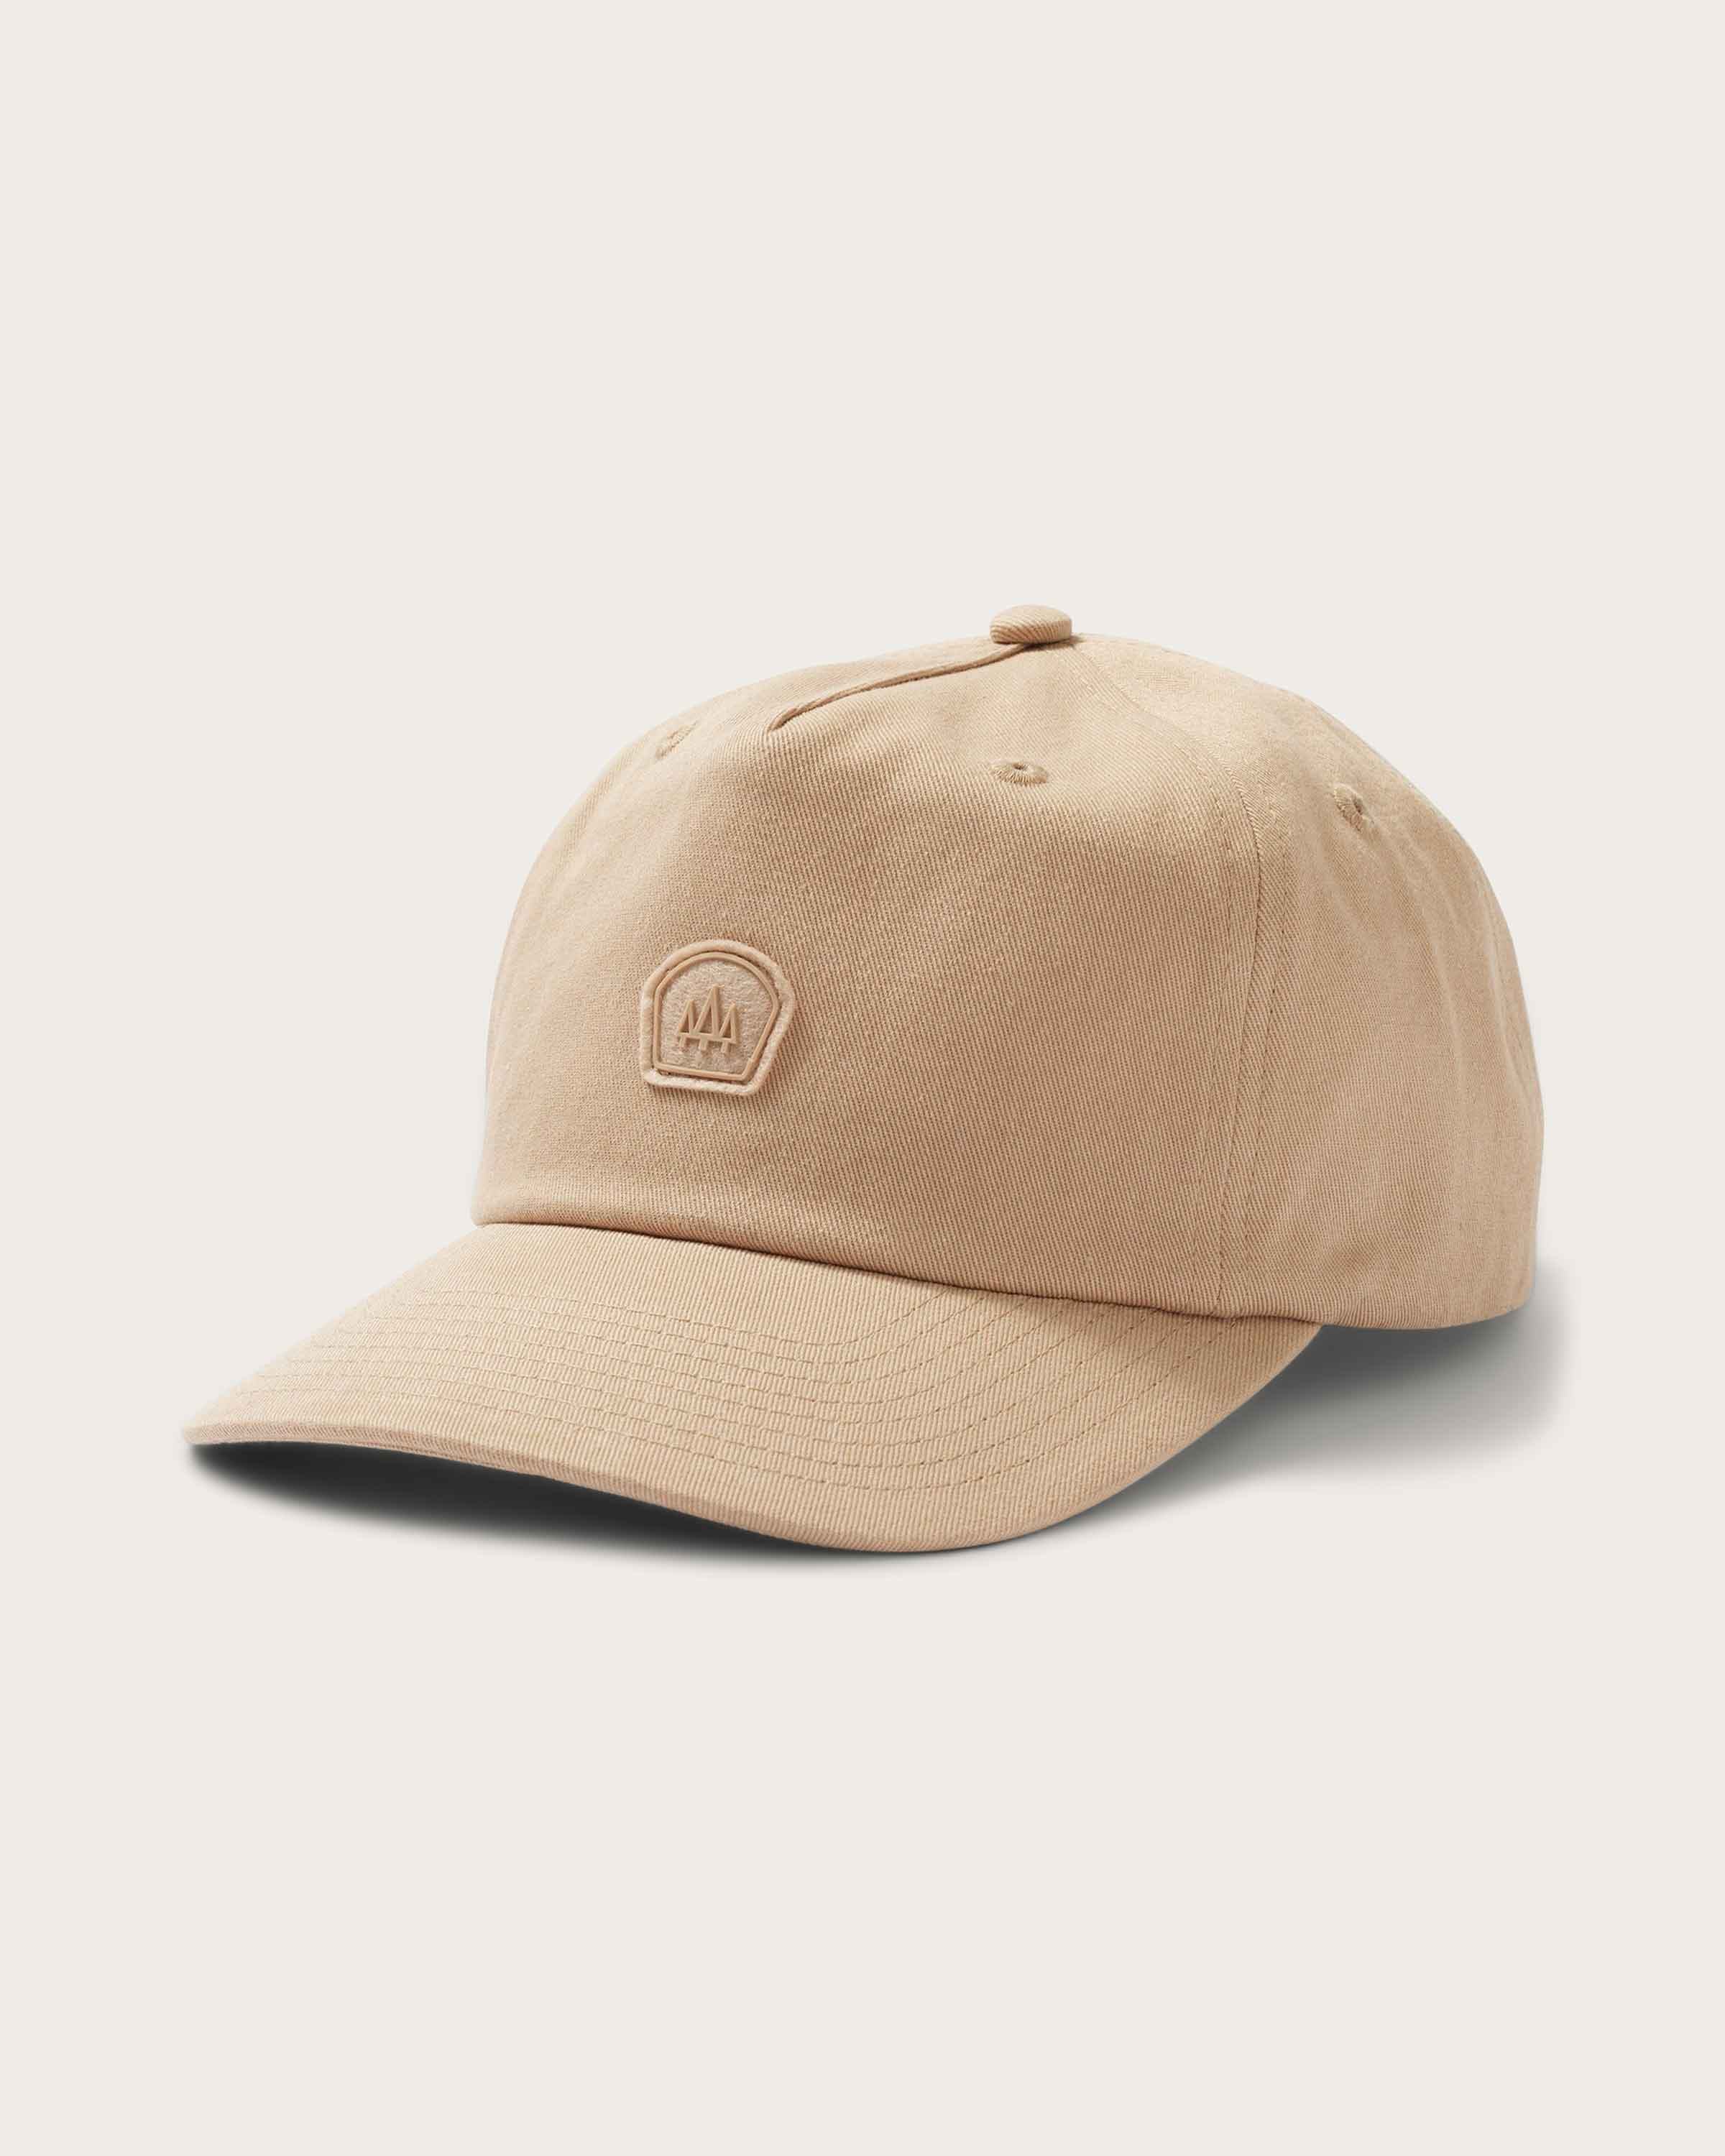 Asher 5 Panel Hat in Khaki - undefined - Hemlock Hat Co. Ball Caps